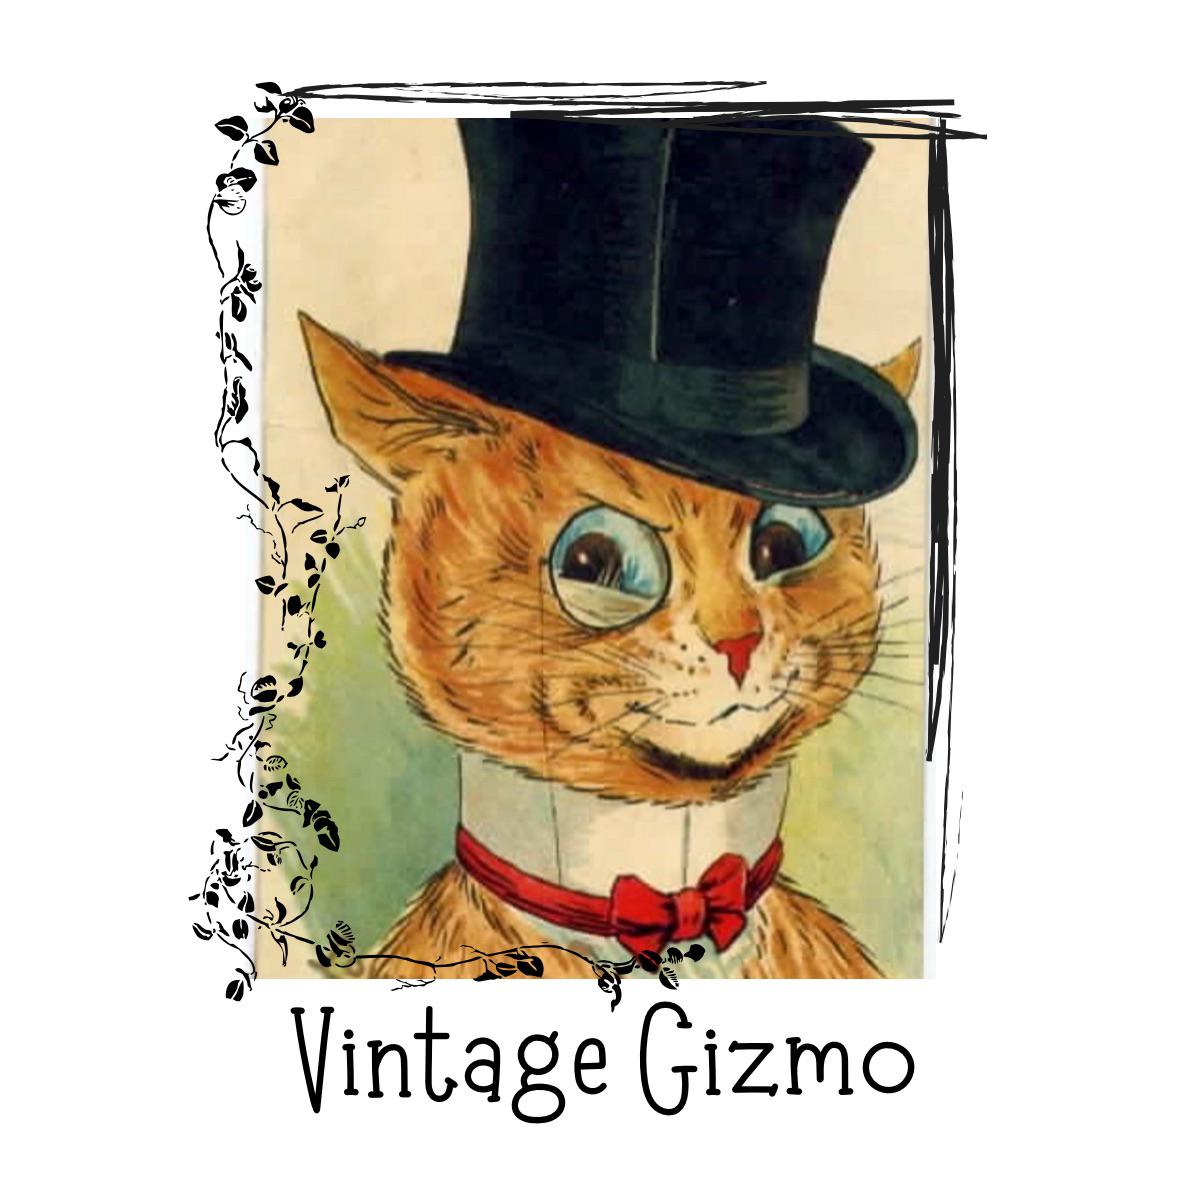 Vintage Gizmo's images